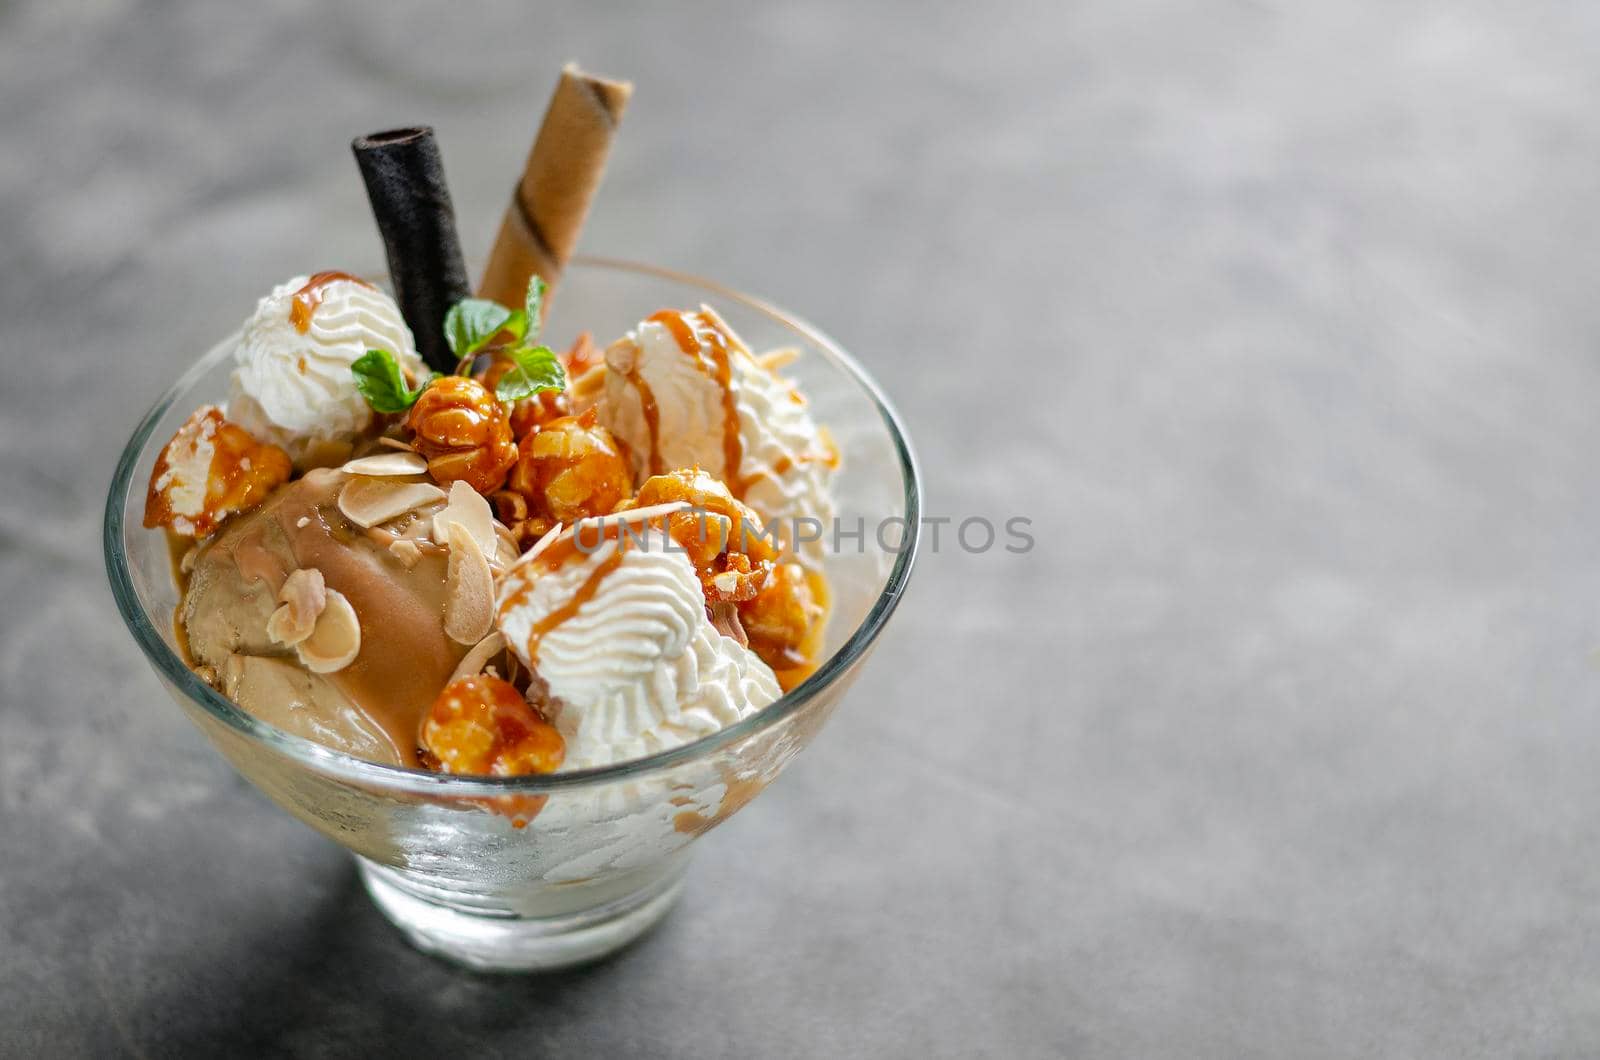 caramel and almond ice cream with caramelized popcorn sundae dessert in glass bowl